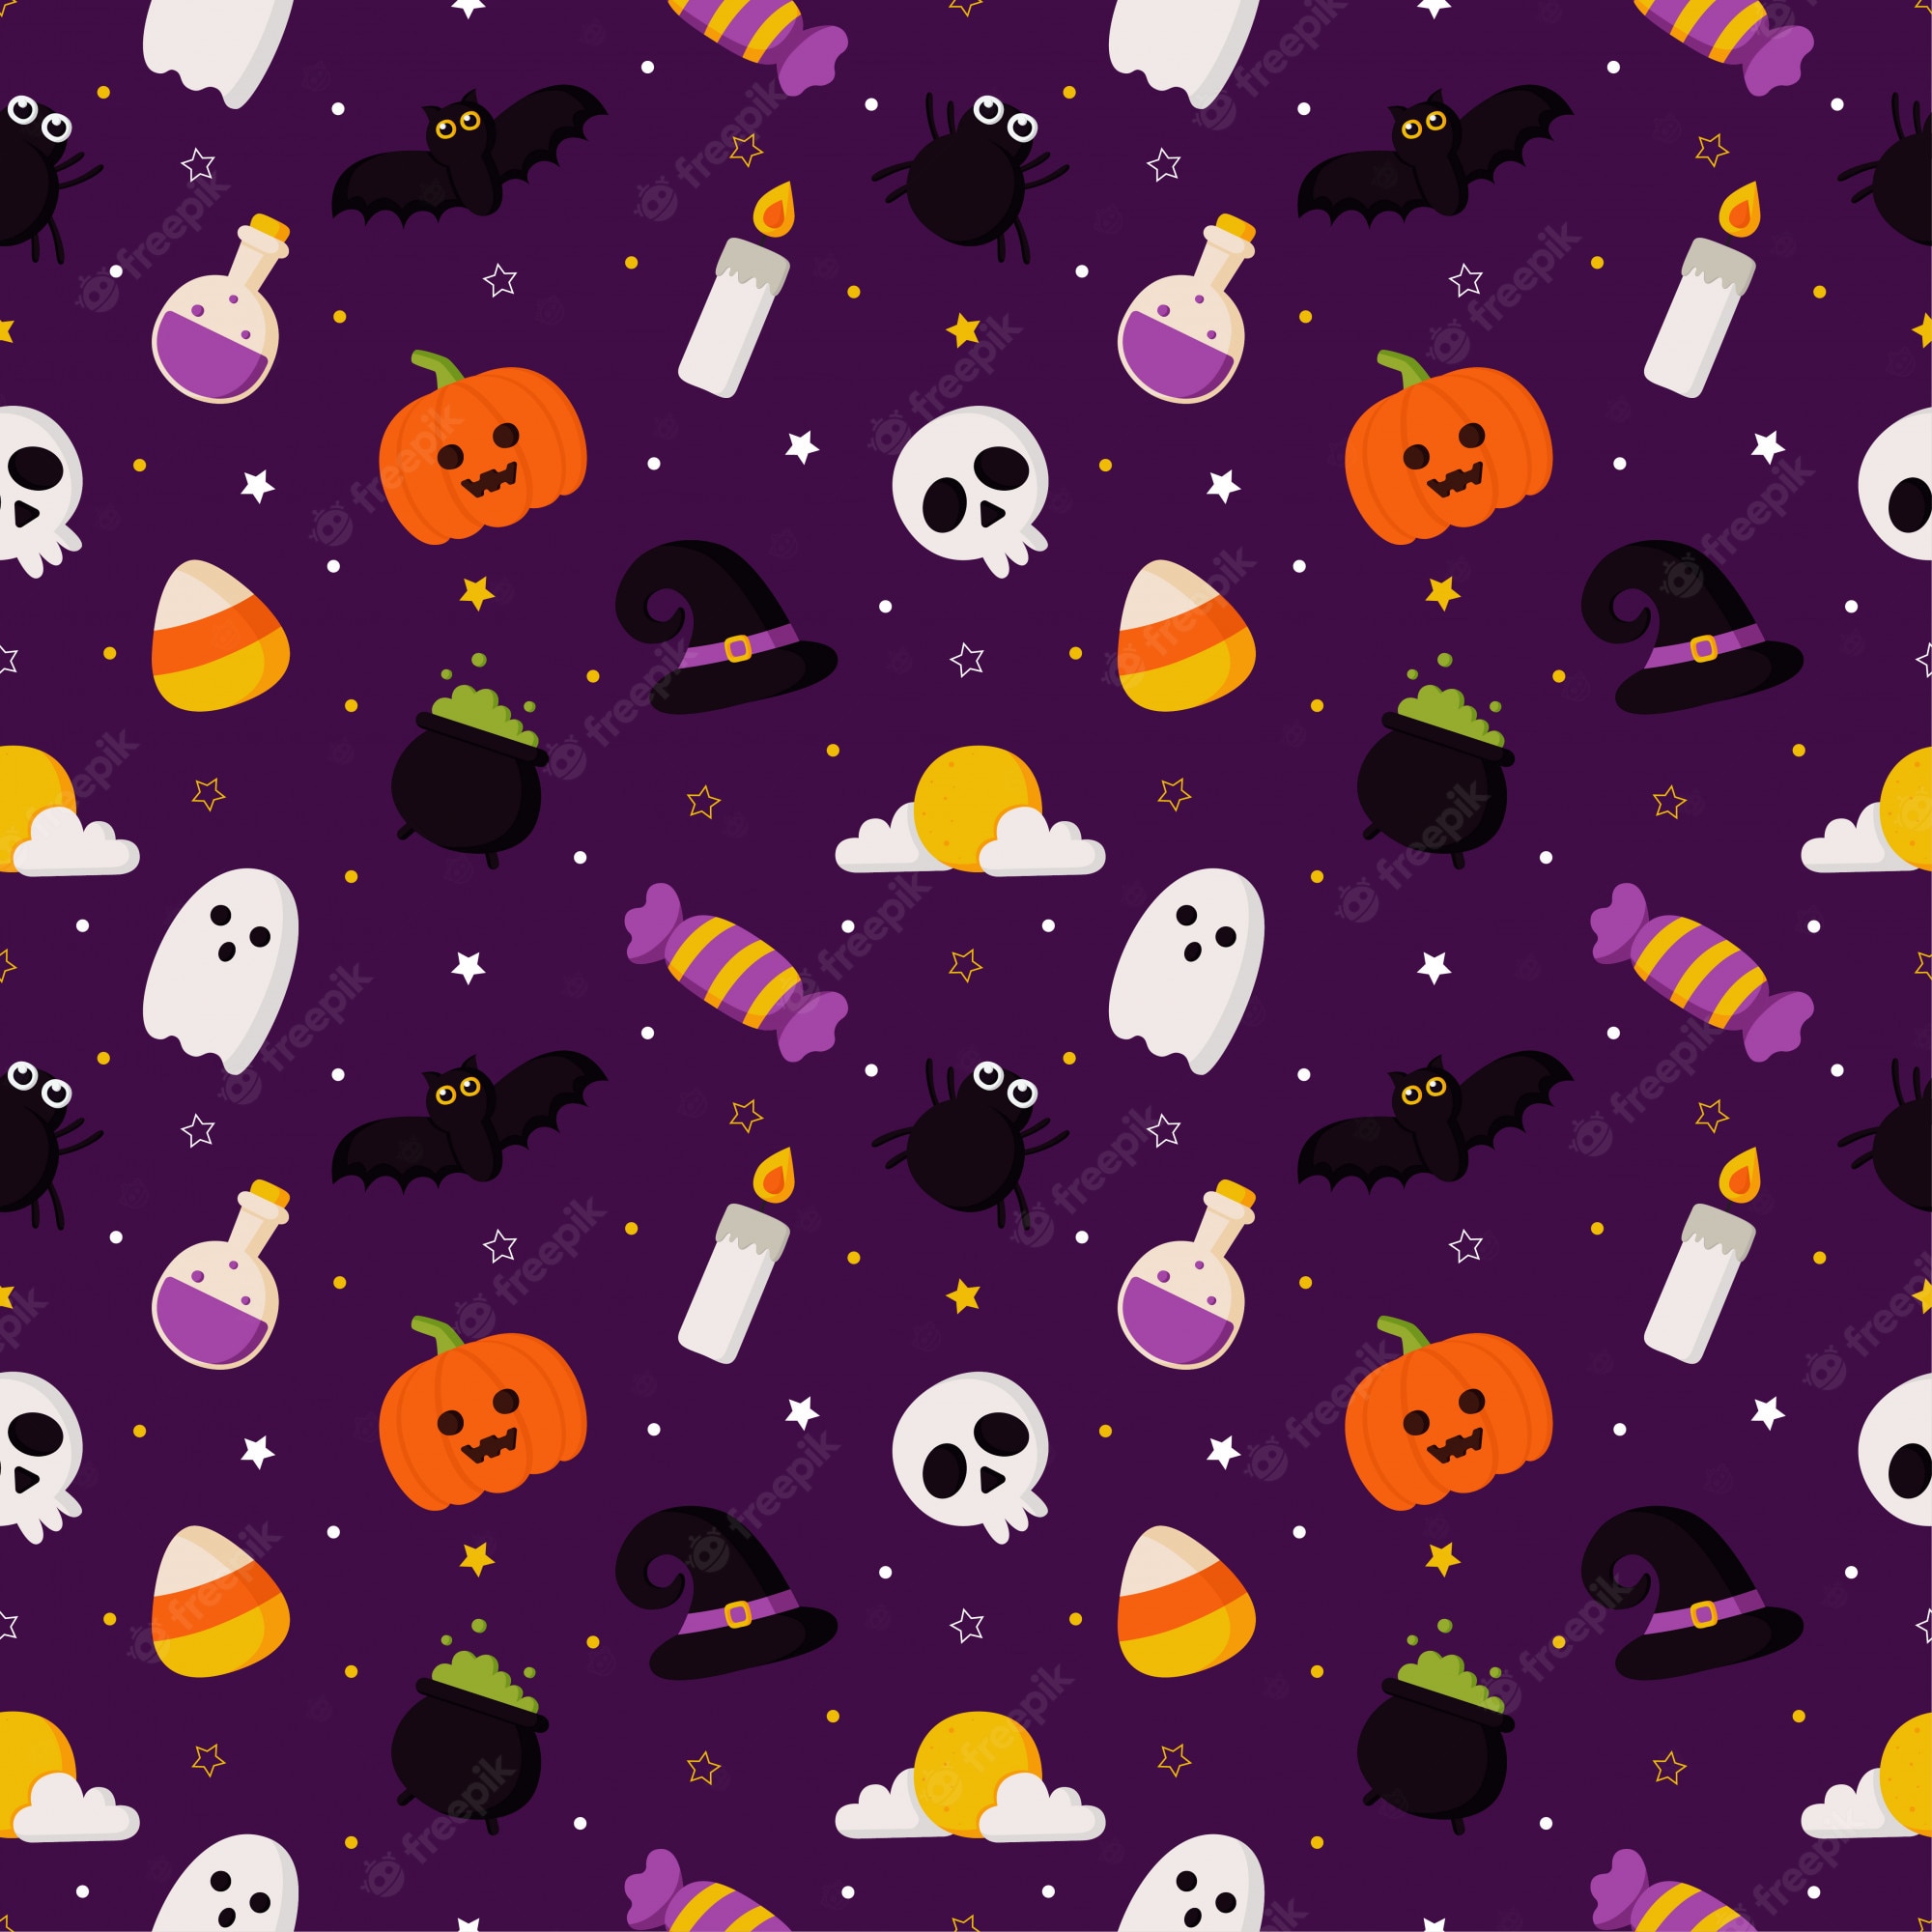 Premium Vector. Happy halloween seamless pattern on purple background